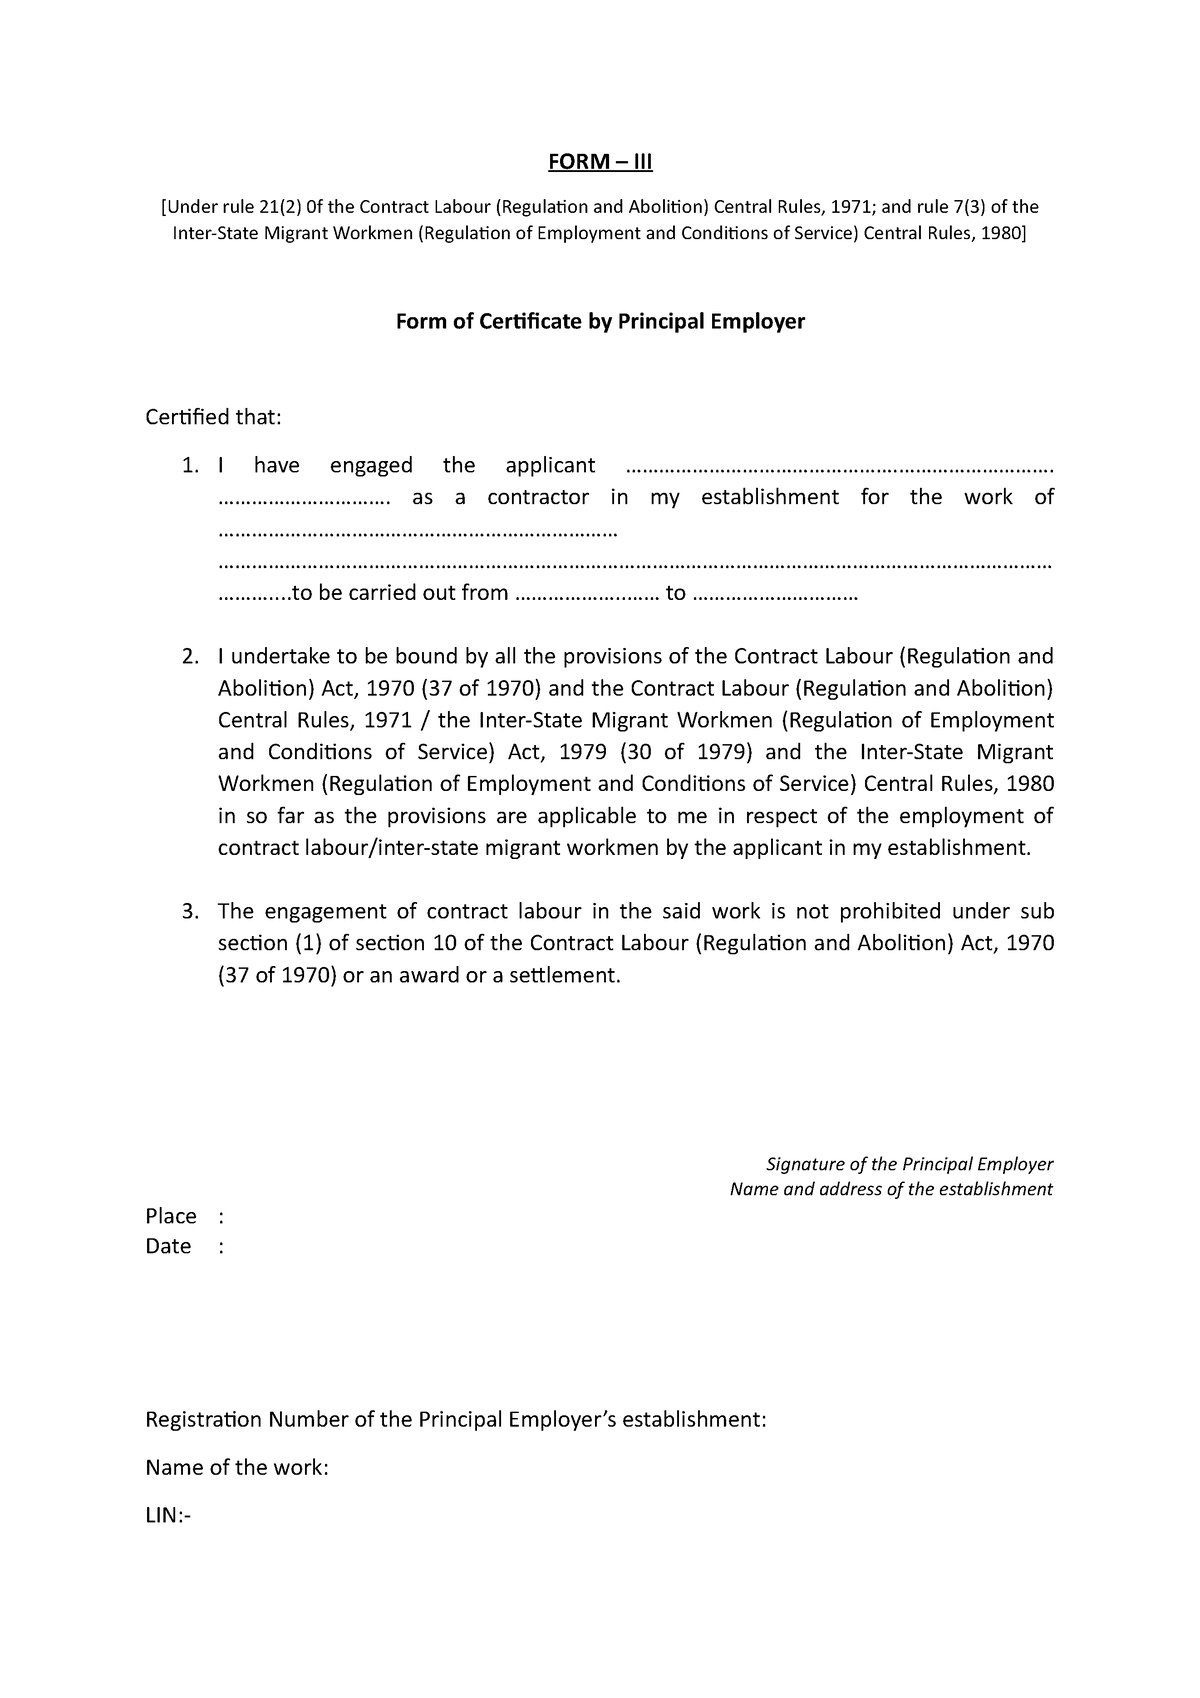 Form III Principal Employer Certificate FORM III Under rule 21(2